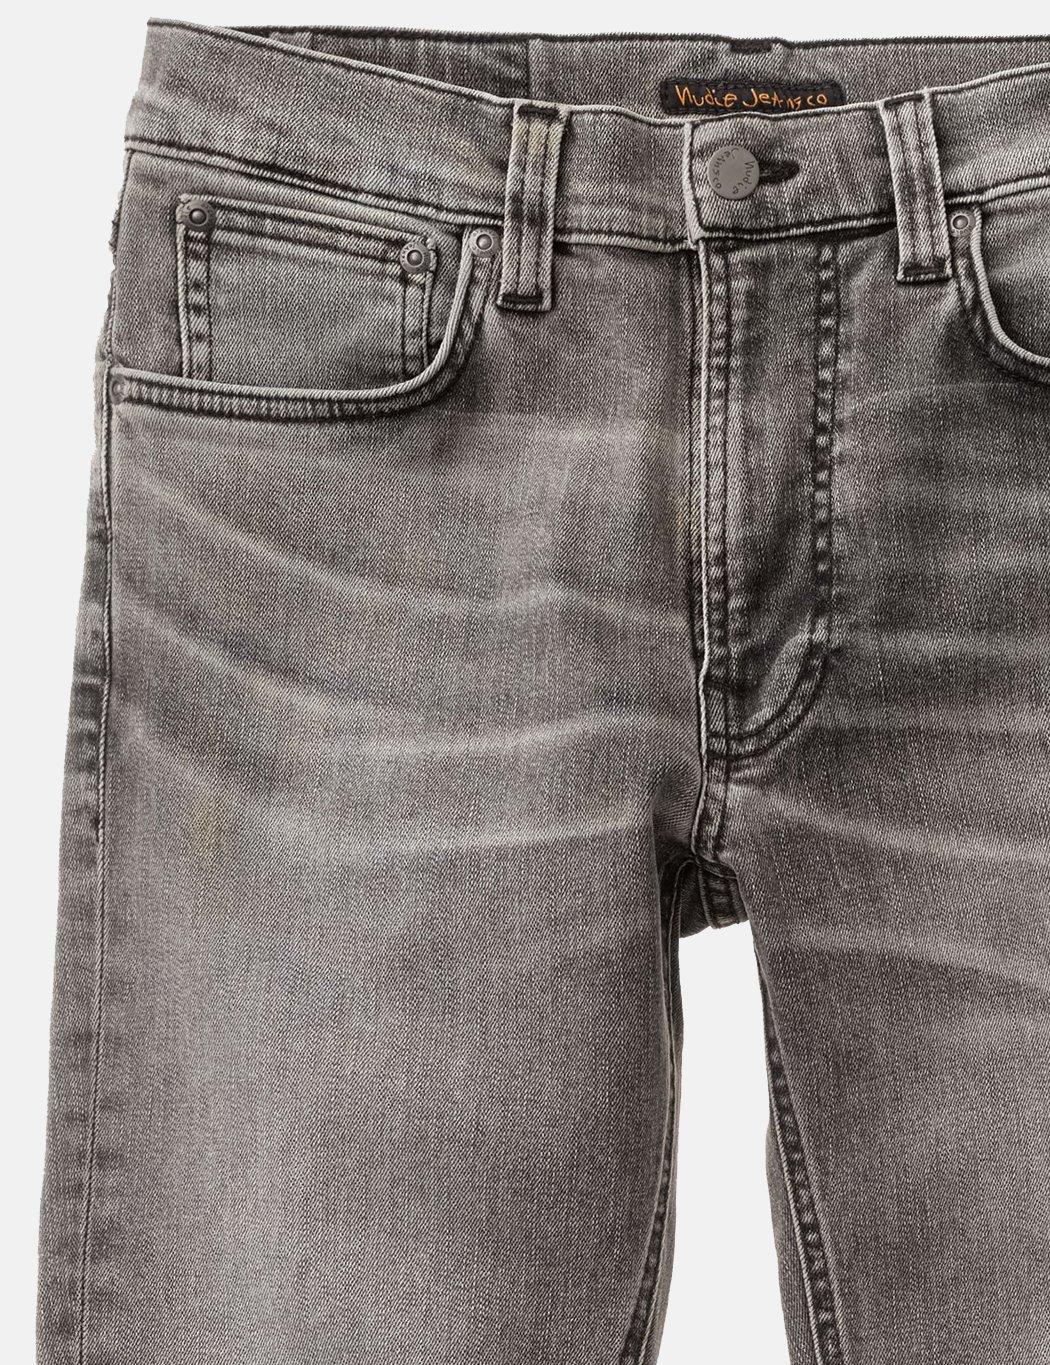 Nudie Jeans Lean Dean Jeans (slim Tapered) in Gray for Men - Lyst